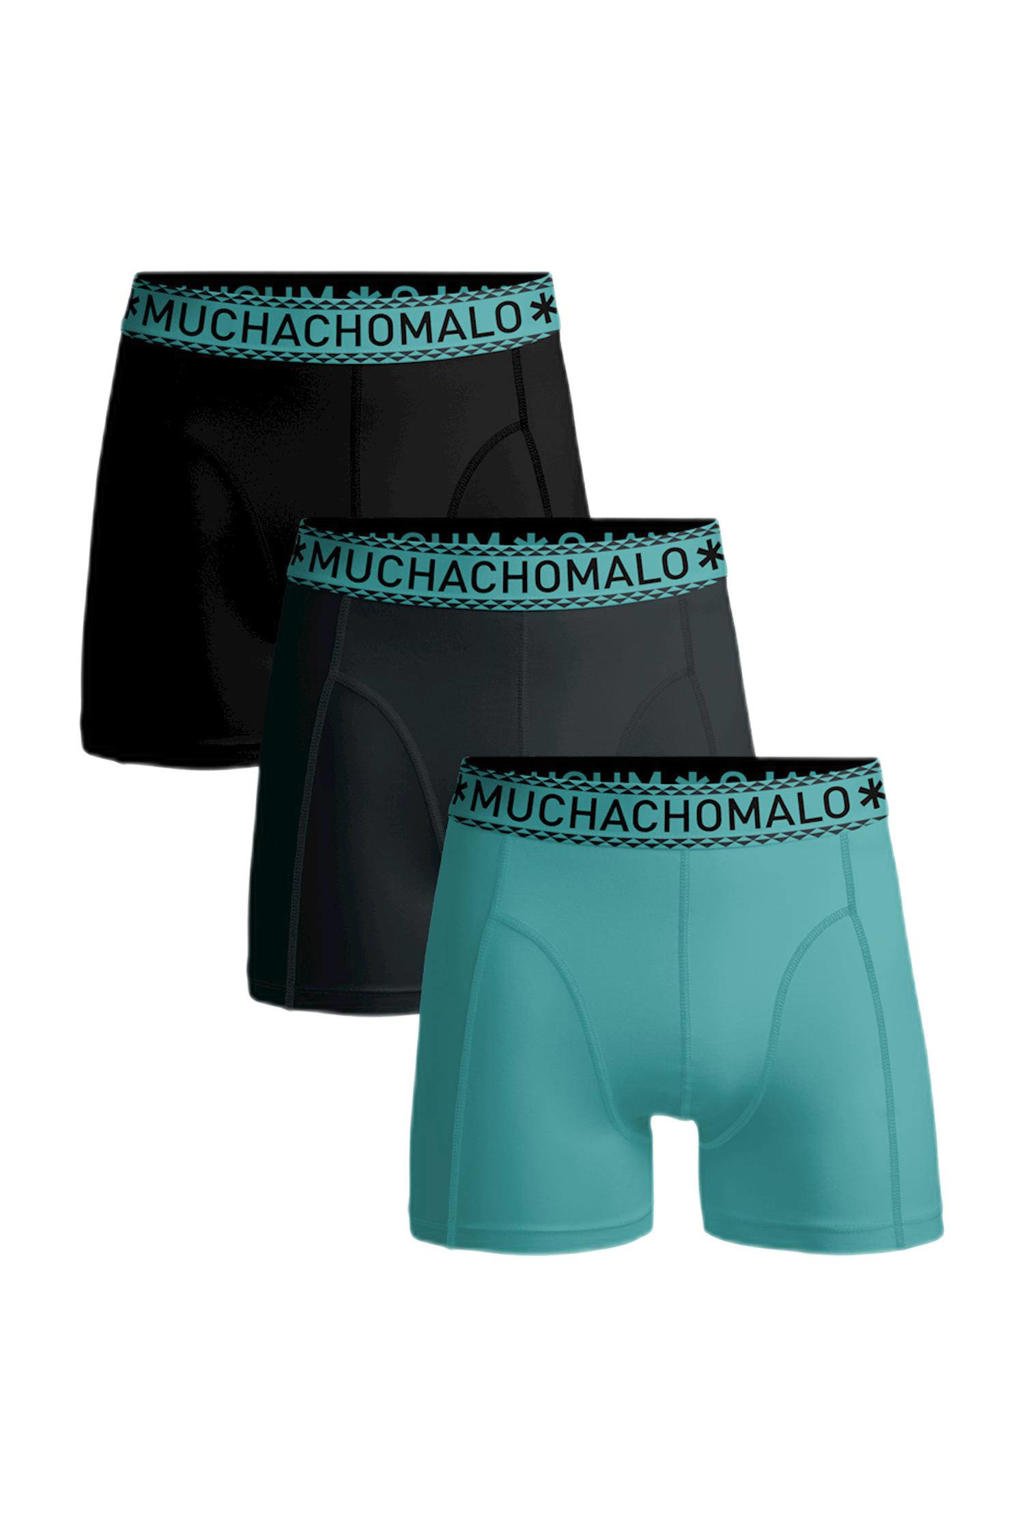 Muchachomalo   boxershort - set van 3 groen/zwart